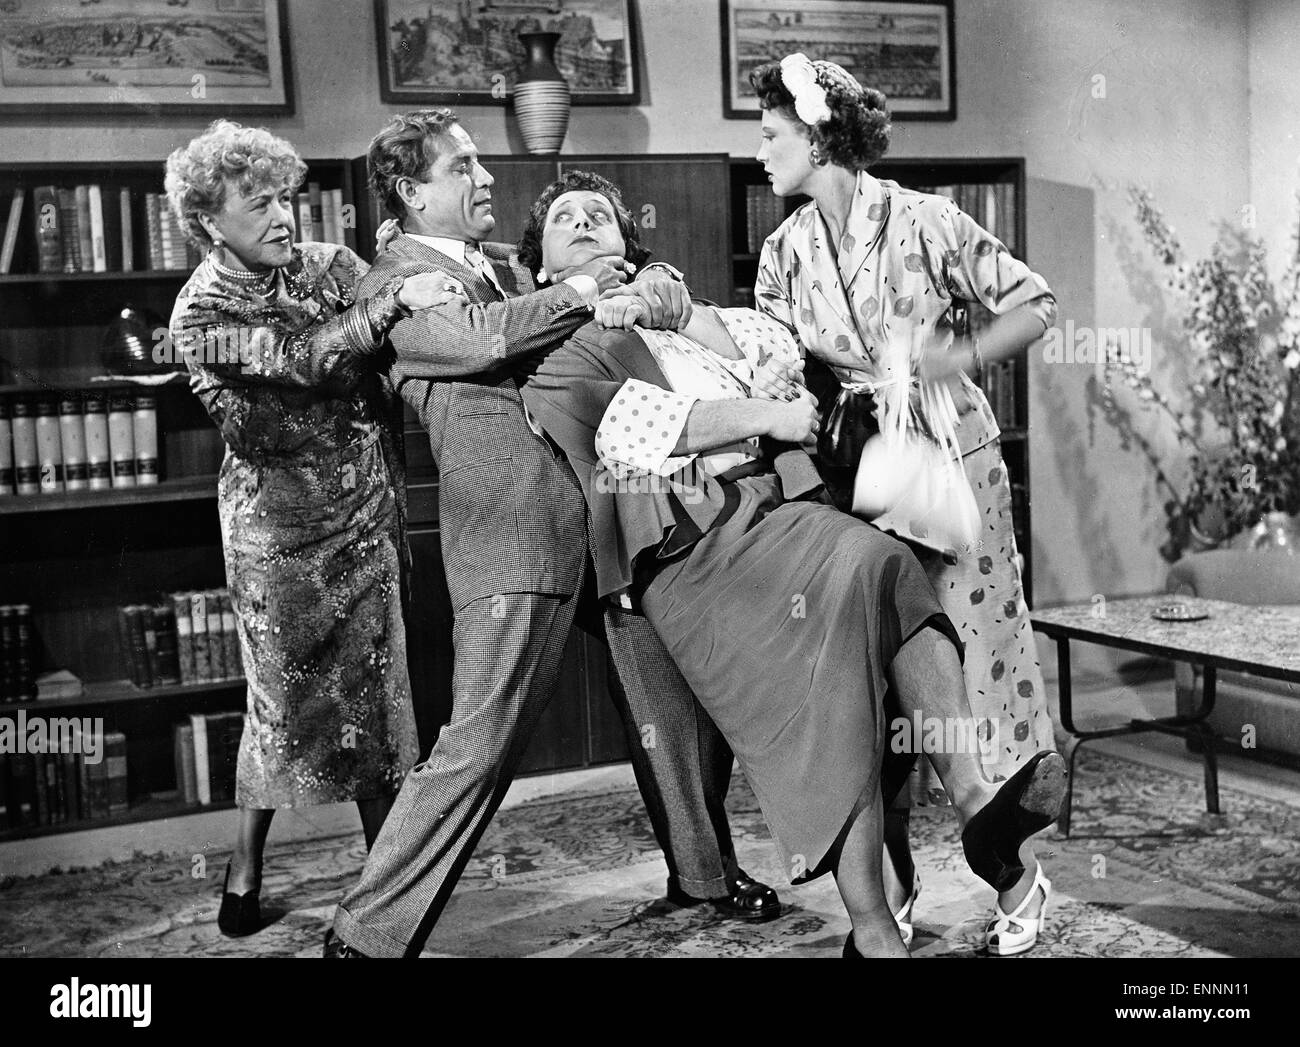 Tante Jutta aus Kalkutta, Deutschland 1953, Regie: Karl Georg Külb, Darsteller: Ida Wüst, Viktor Staal, Gunther Philipp, Ingrid  Stock Photo